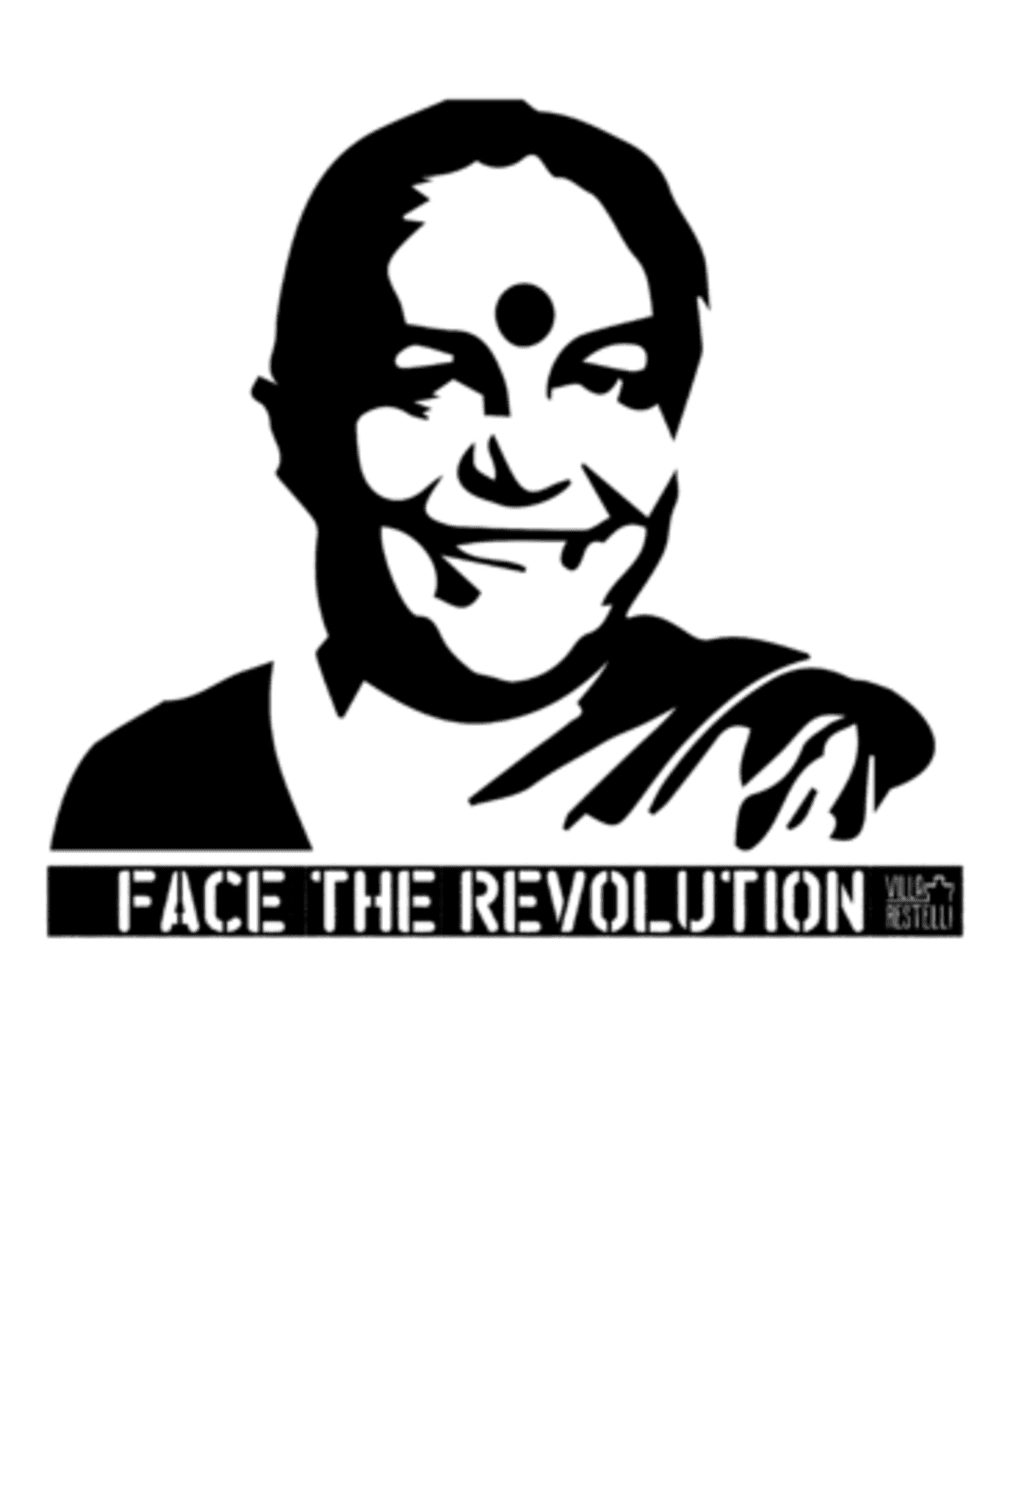 *FACE THE REVOLUTION* - Vandana Shiva